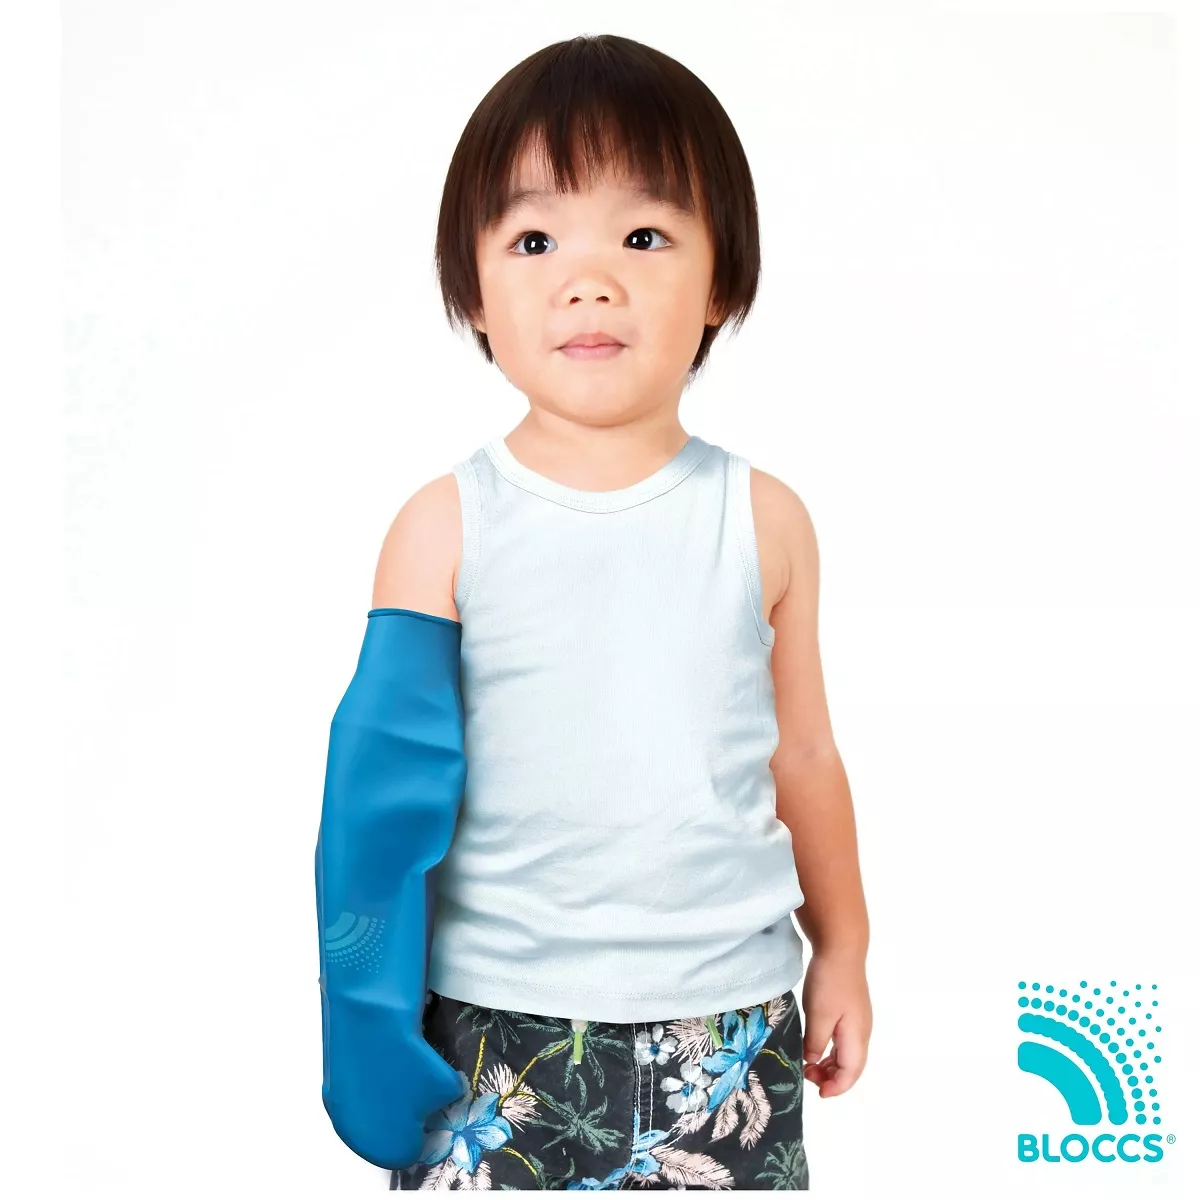 Protectie Bloccs pentru bandaj si ghips pentru mana copil,  marime XS, circumferinta mainii 16-18cm, lungime protectie 33cm, [],pharmazone.ro